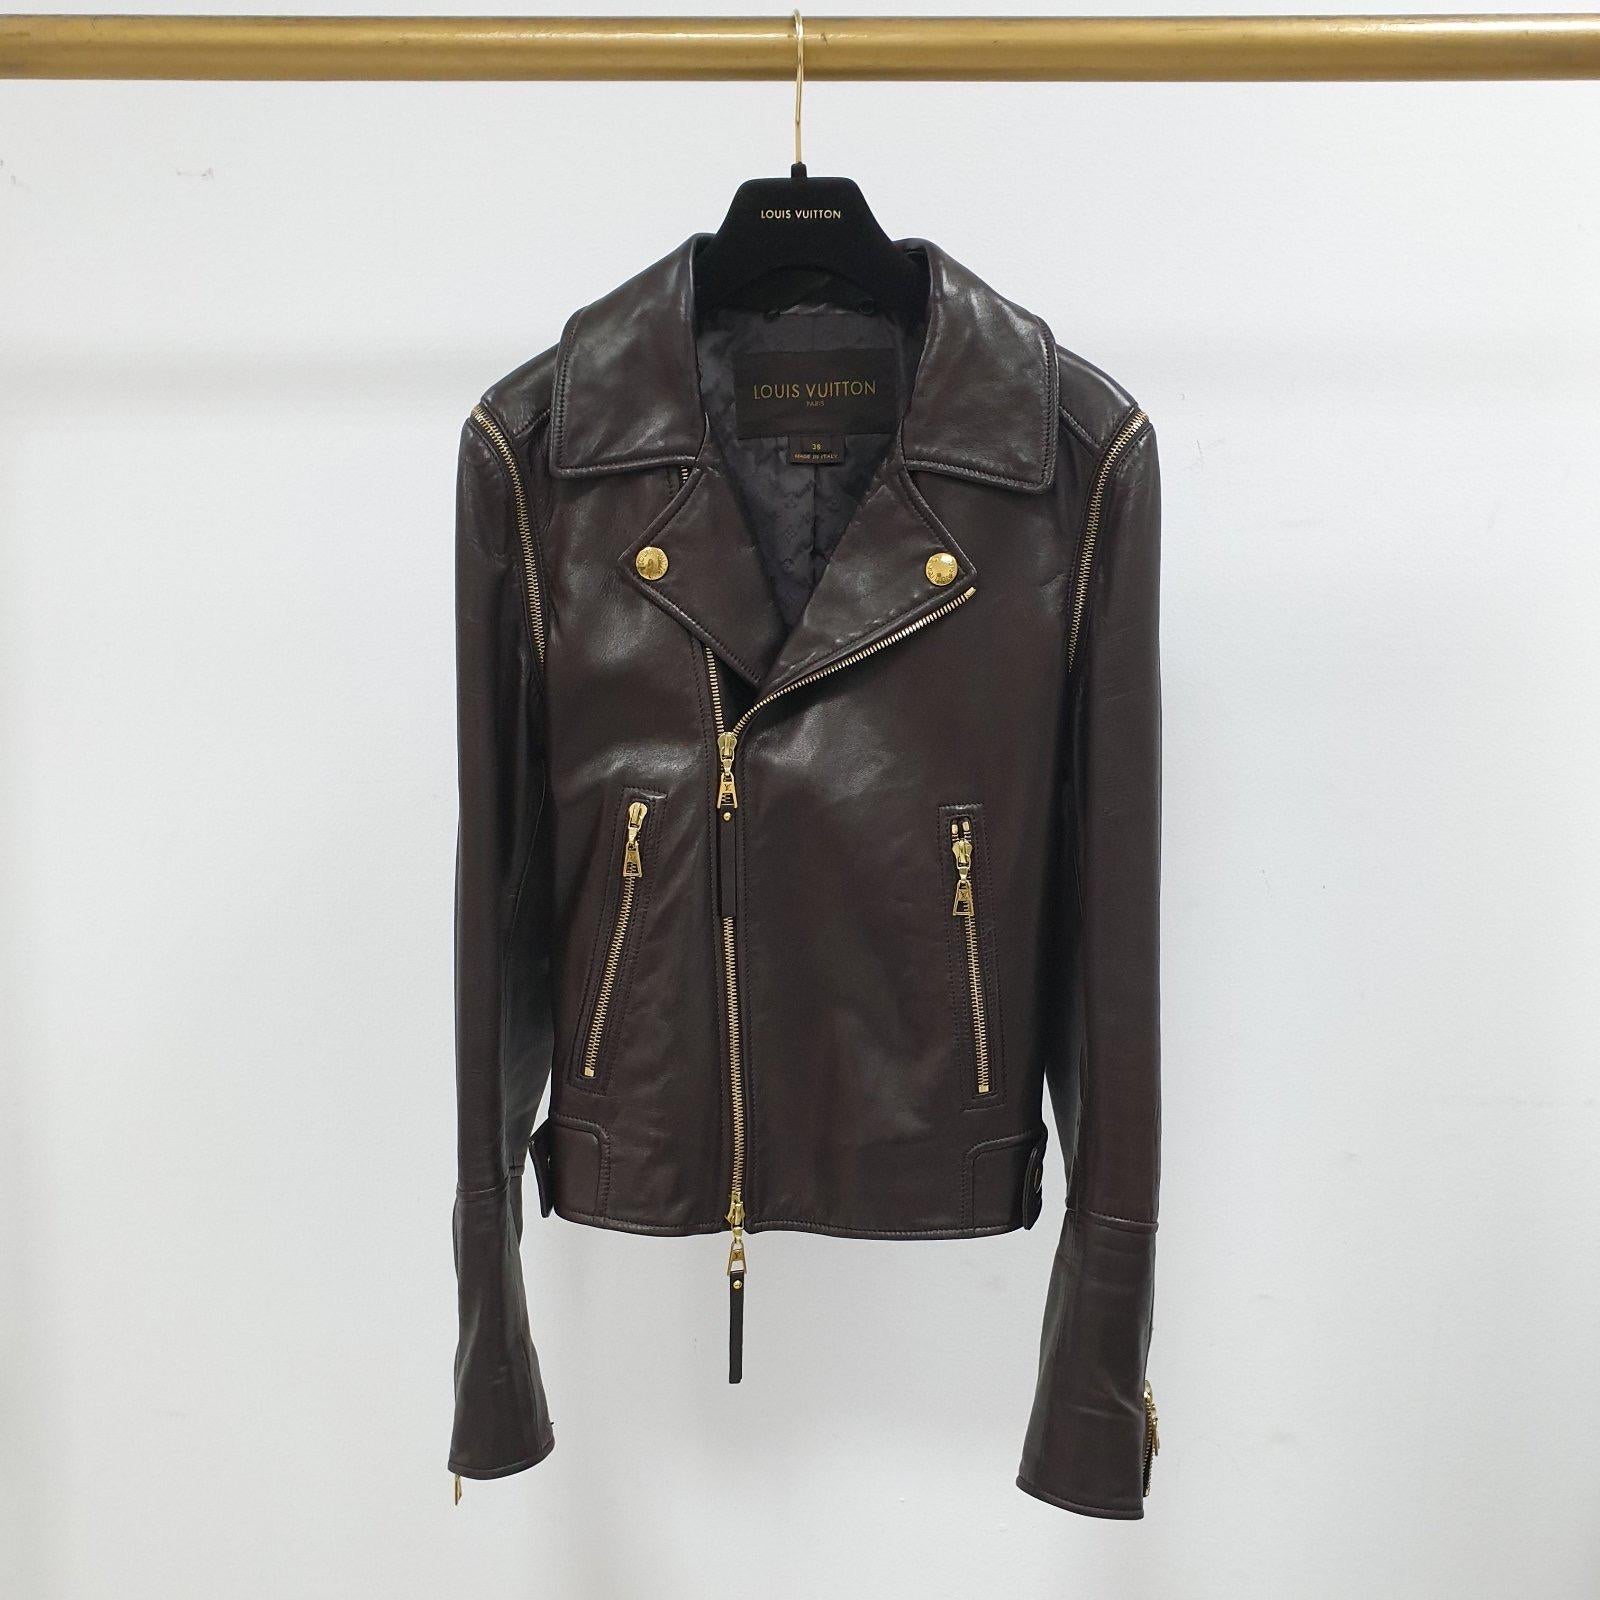 3/4 sleeve leather jacket